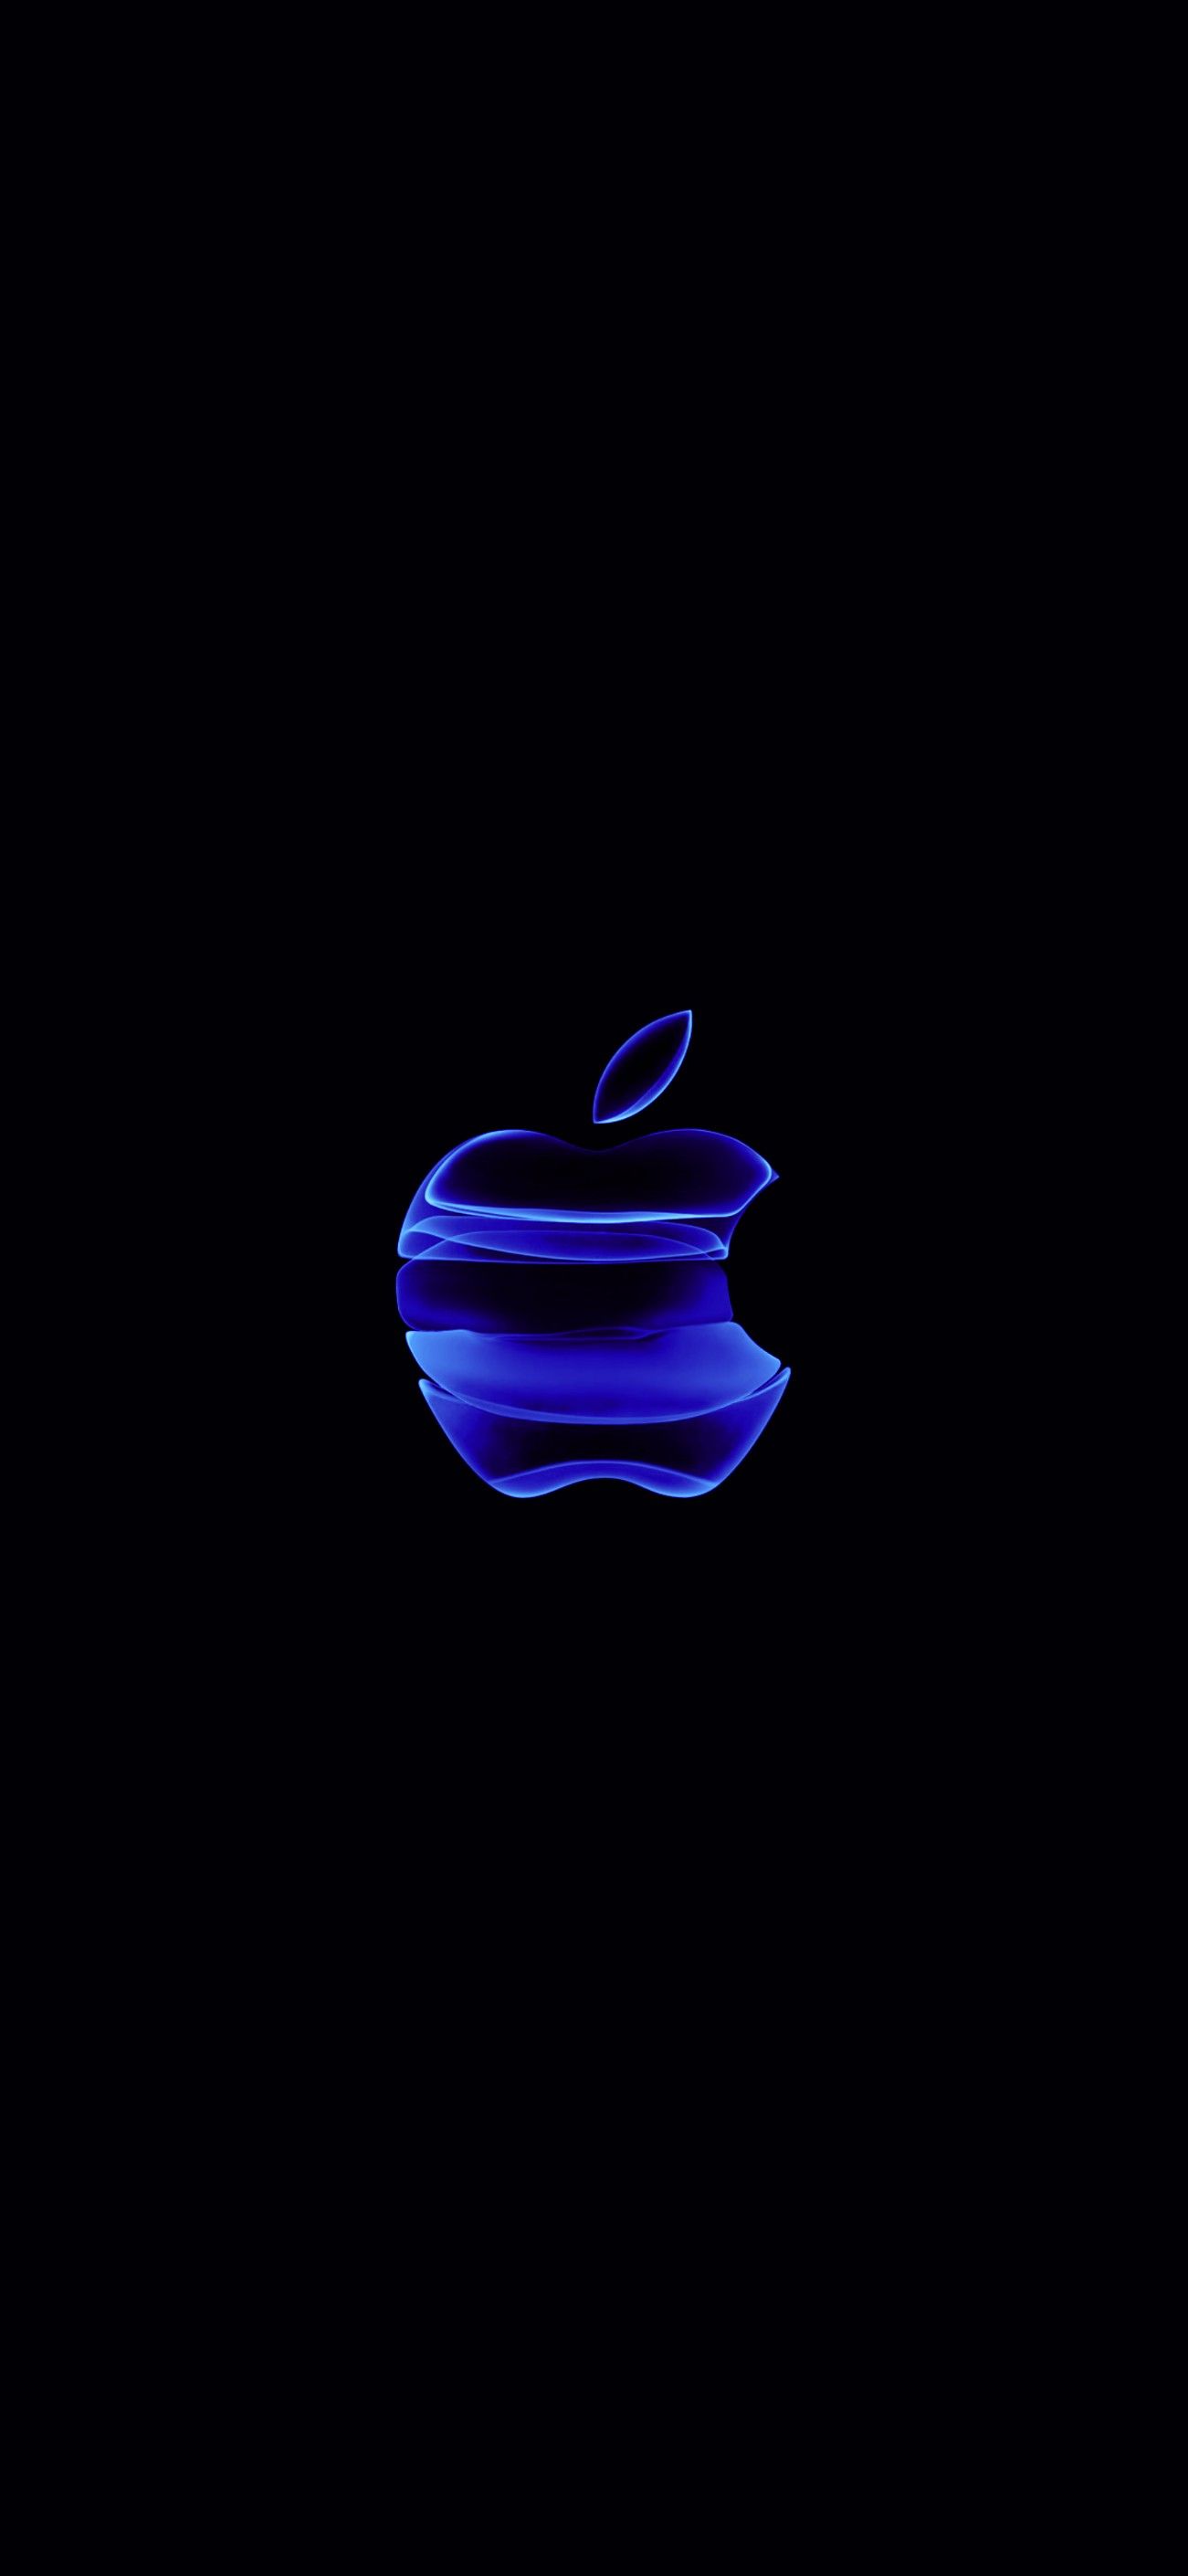 Apple Hintergrundbild 1301x2820. Black And Blue Aesthetic Wallpaper